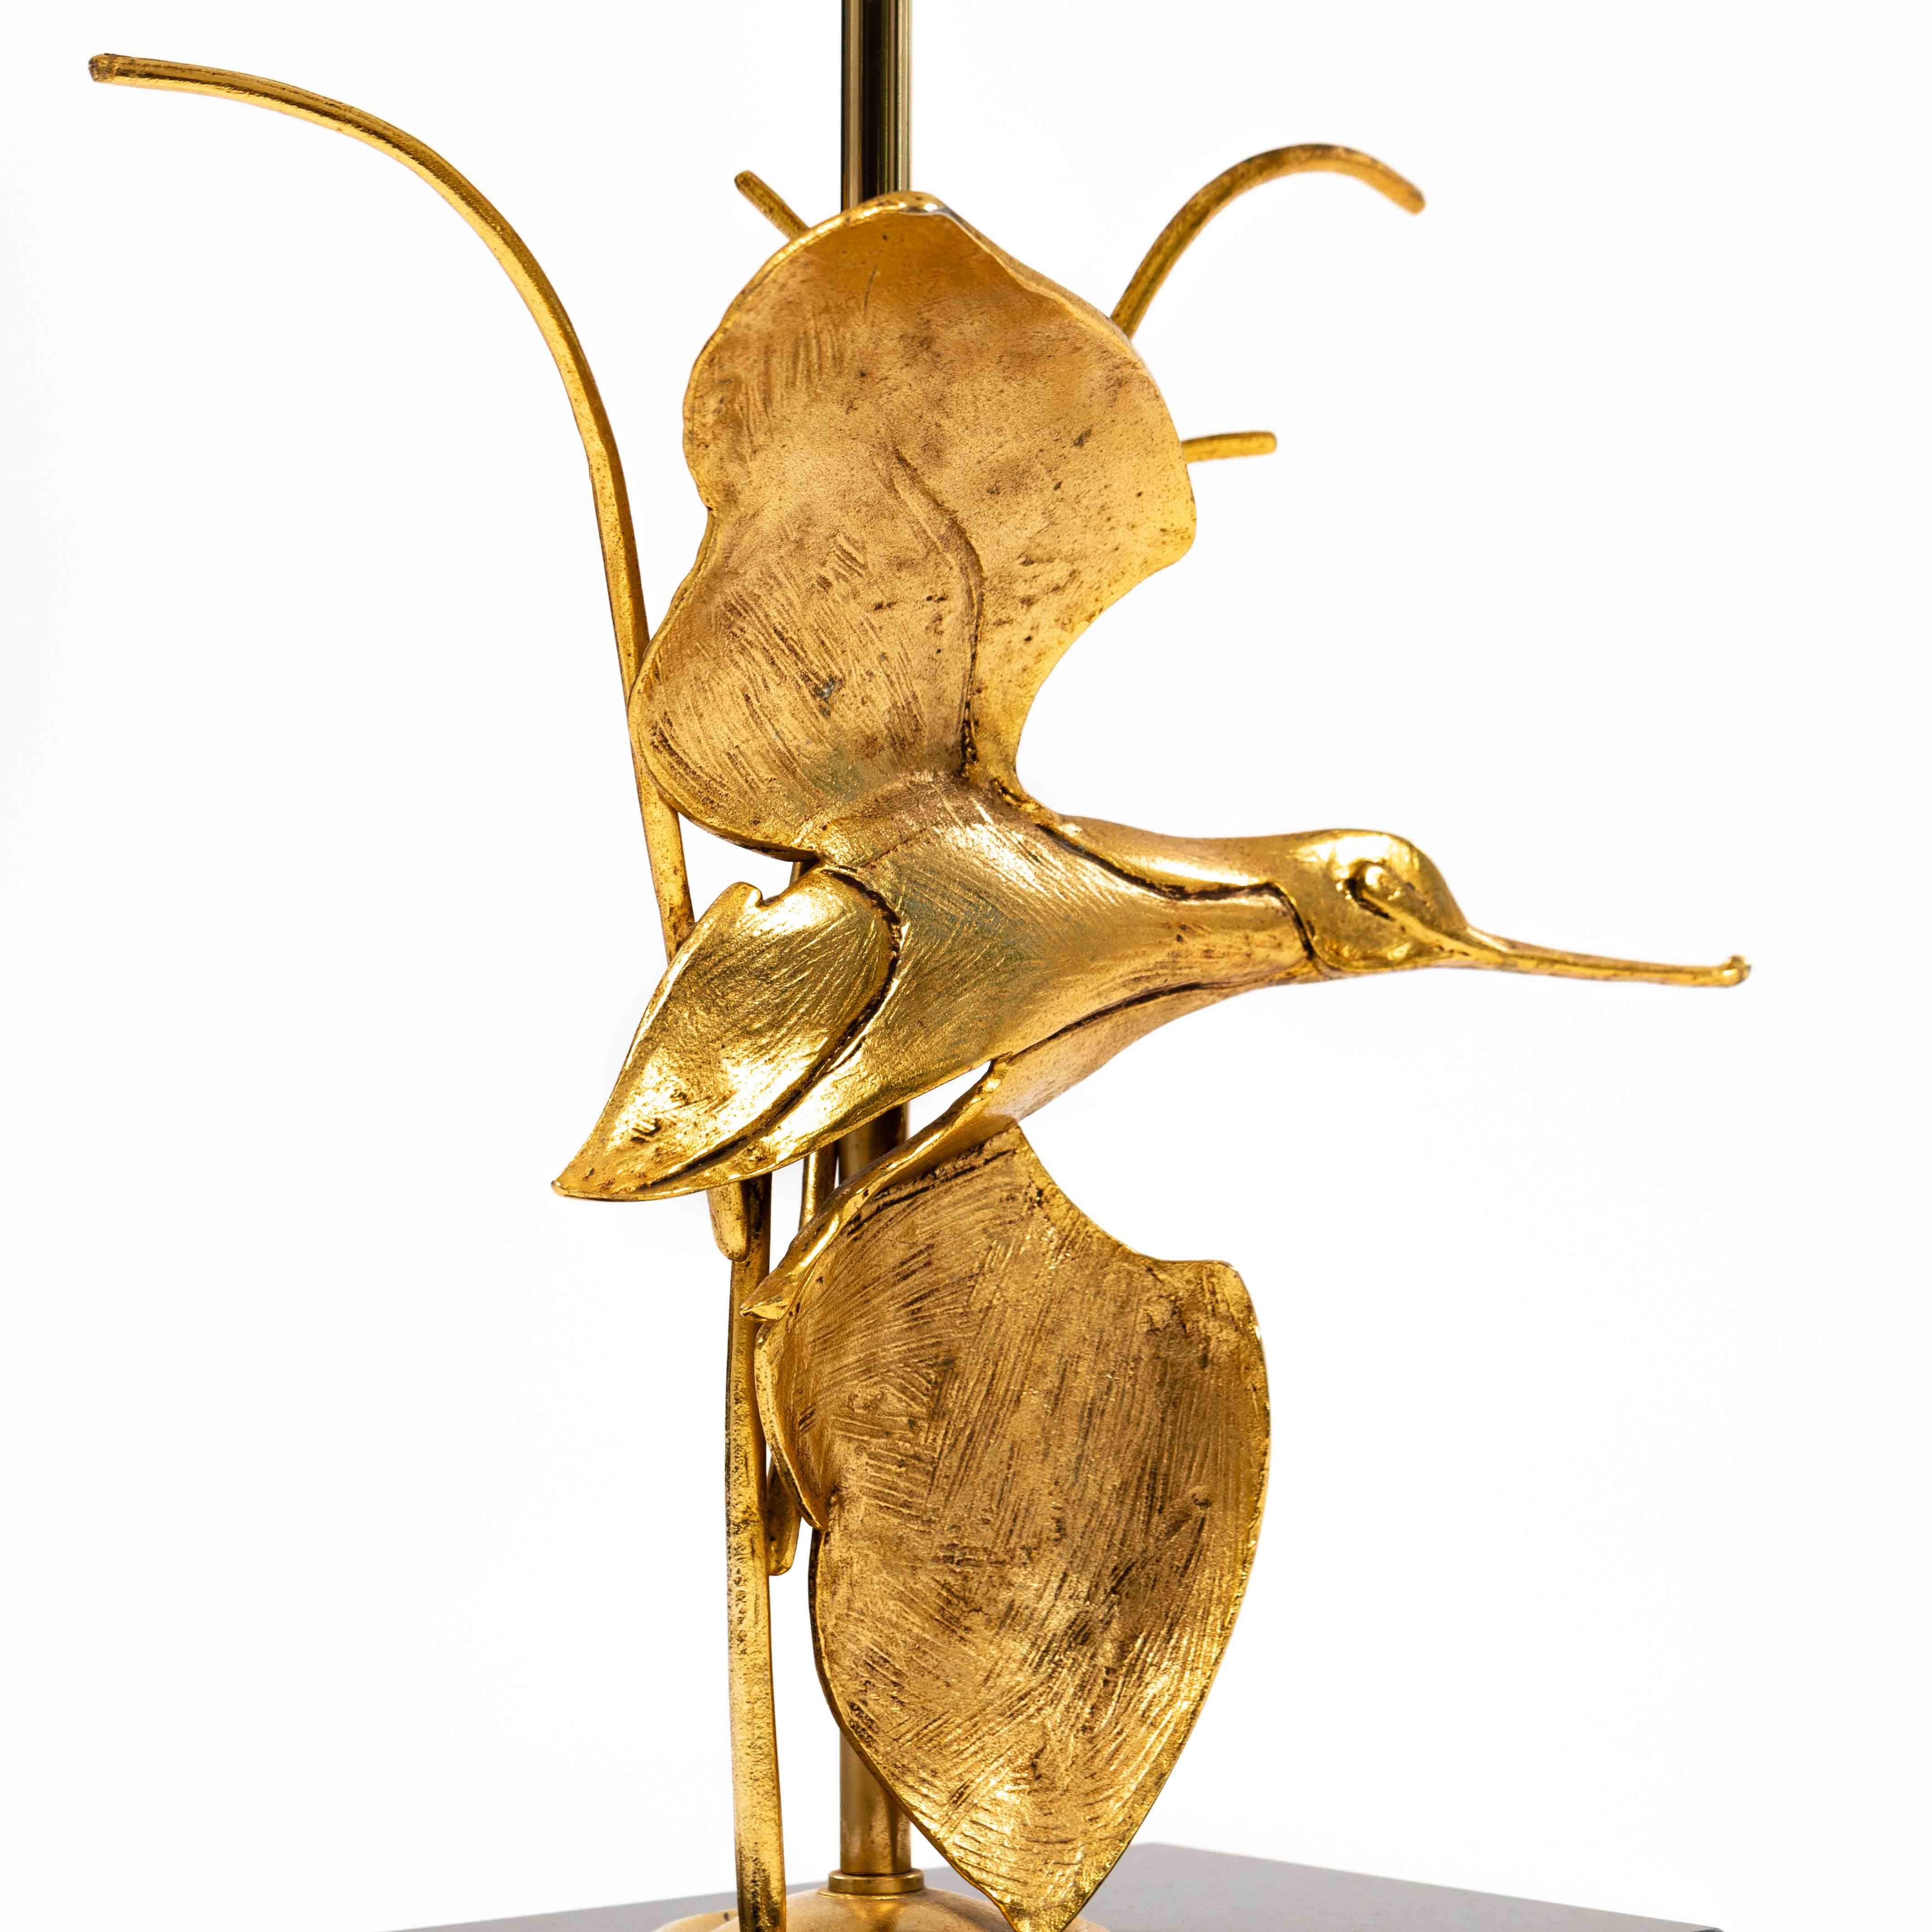 Italian Midcentury Gilded Brass Bird Table Lamp by GM Italia 1950s For Sale 2